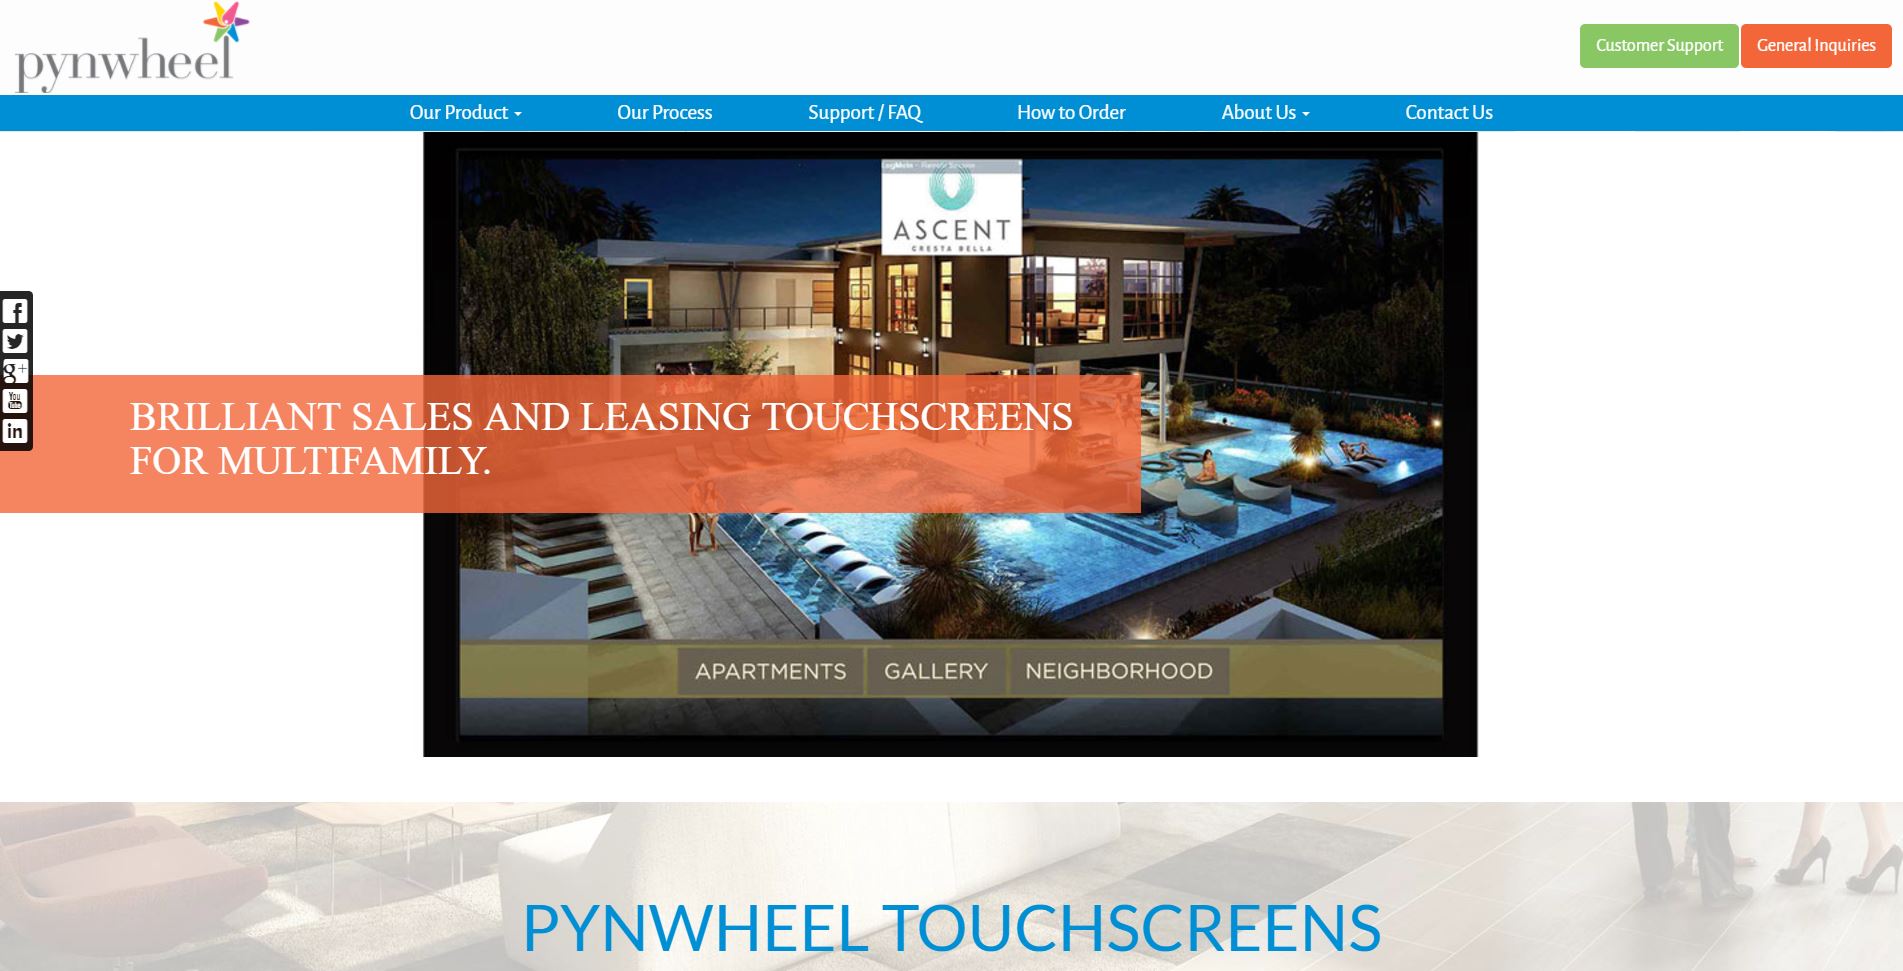 
New Website Launch: Pynwheel